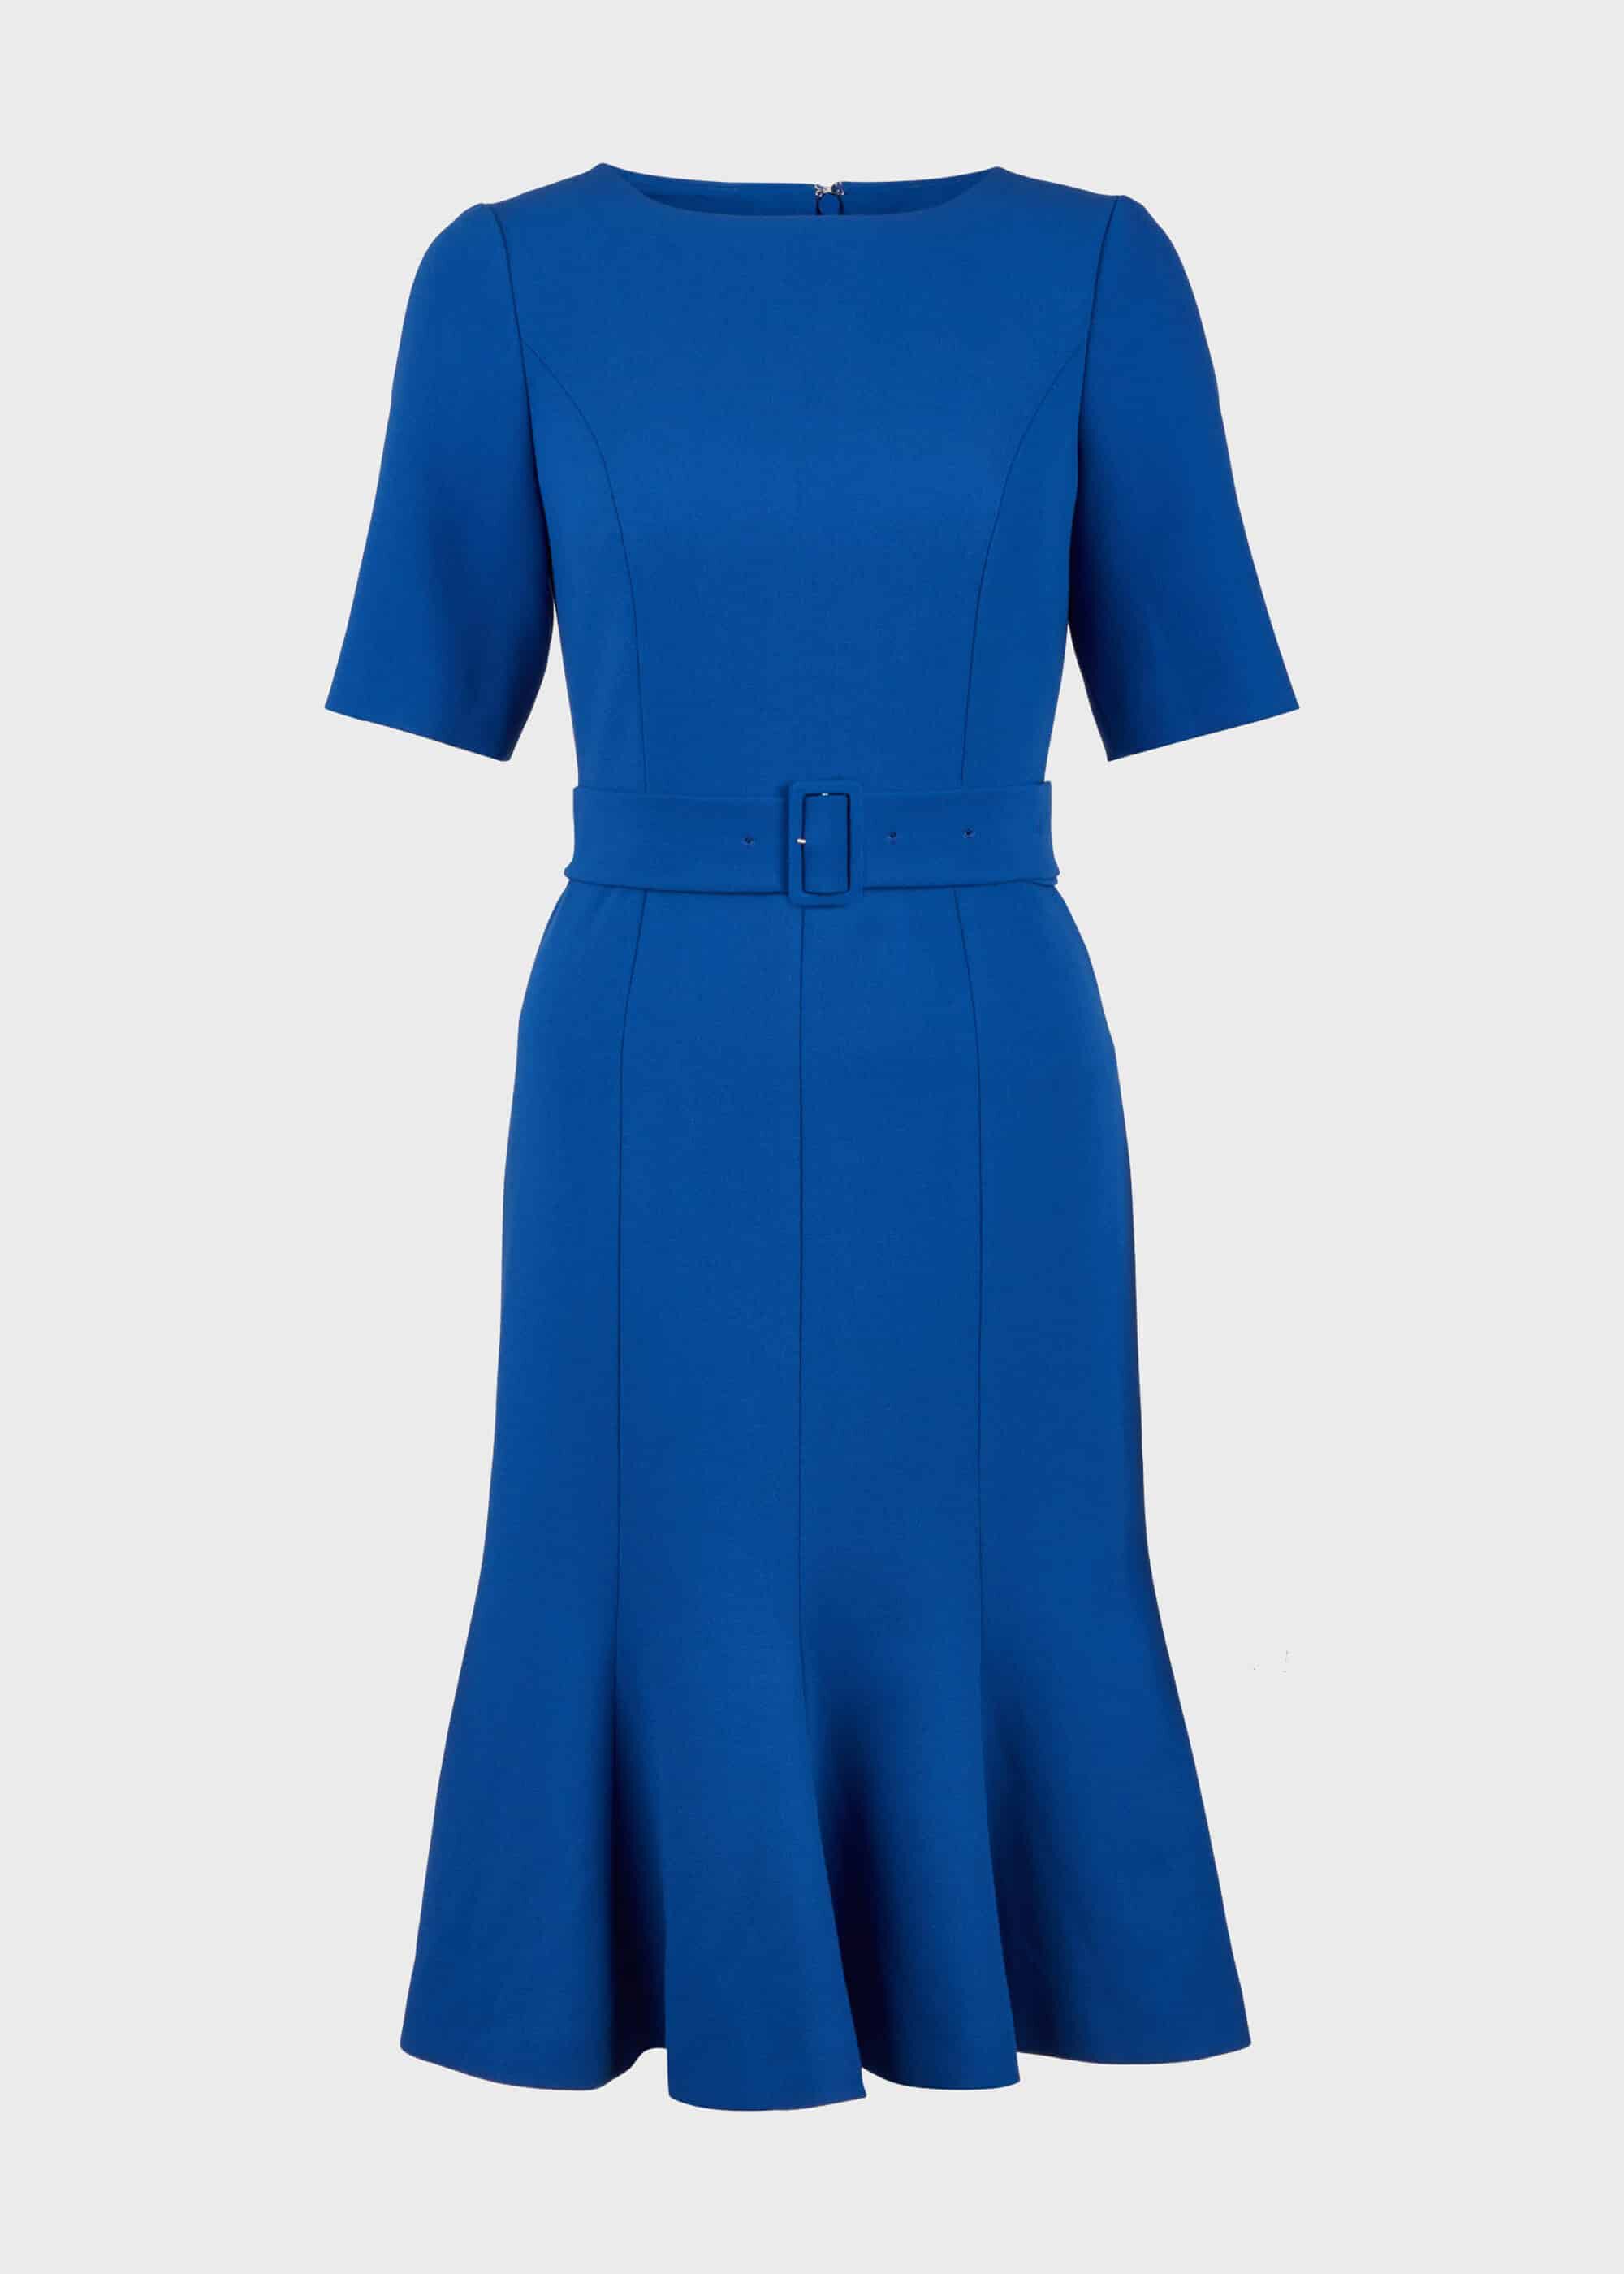 hobbs navy blue dress